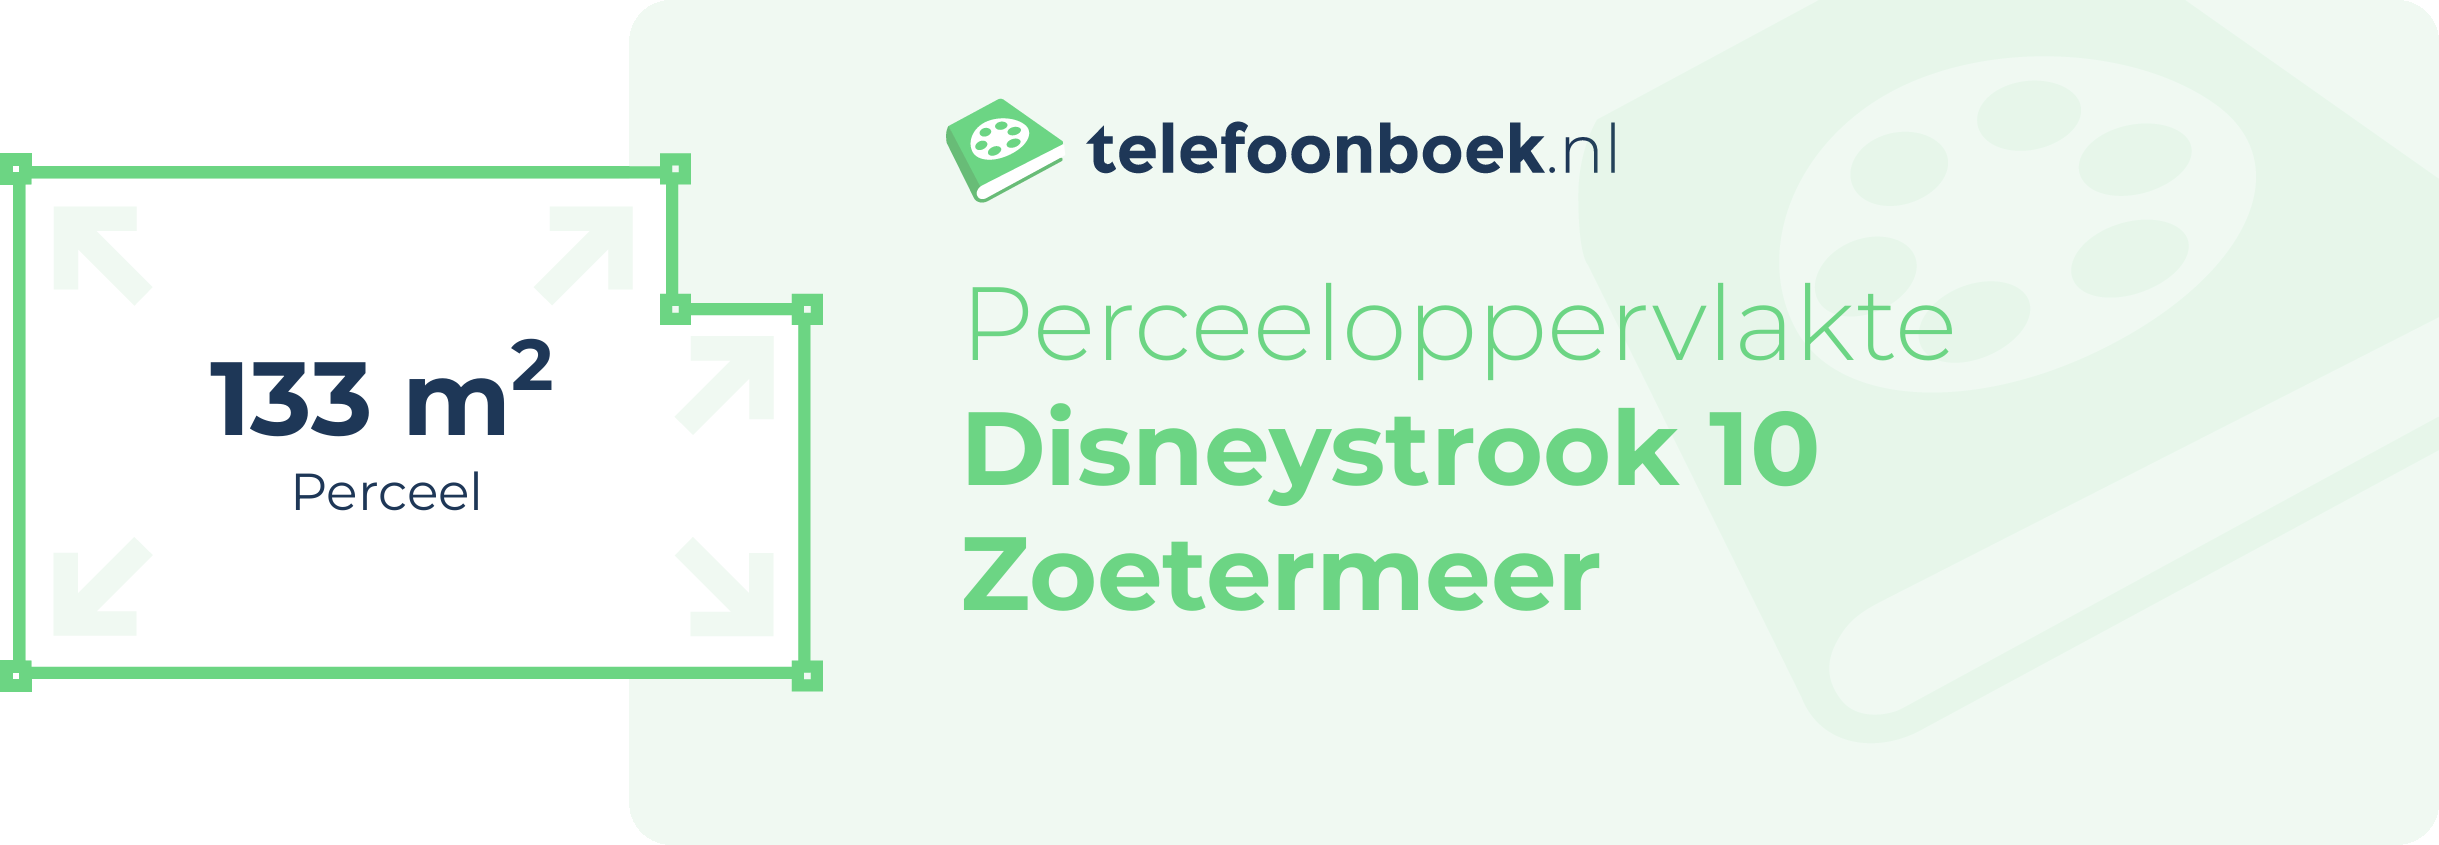 Perceeloppervlakte Disneystrook 10 Zoetermeer